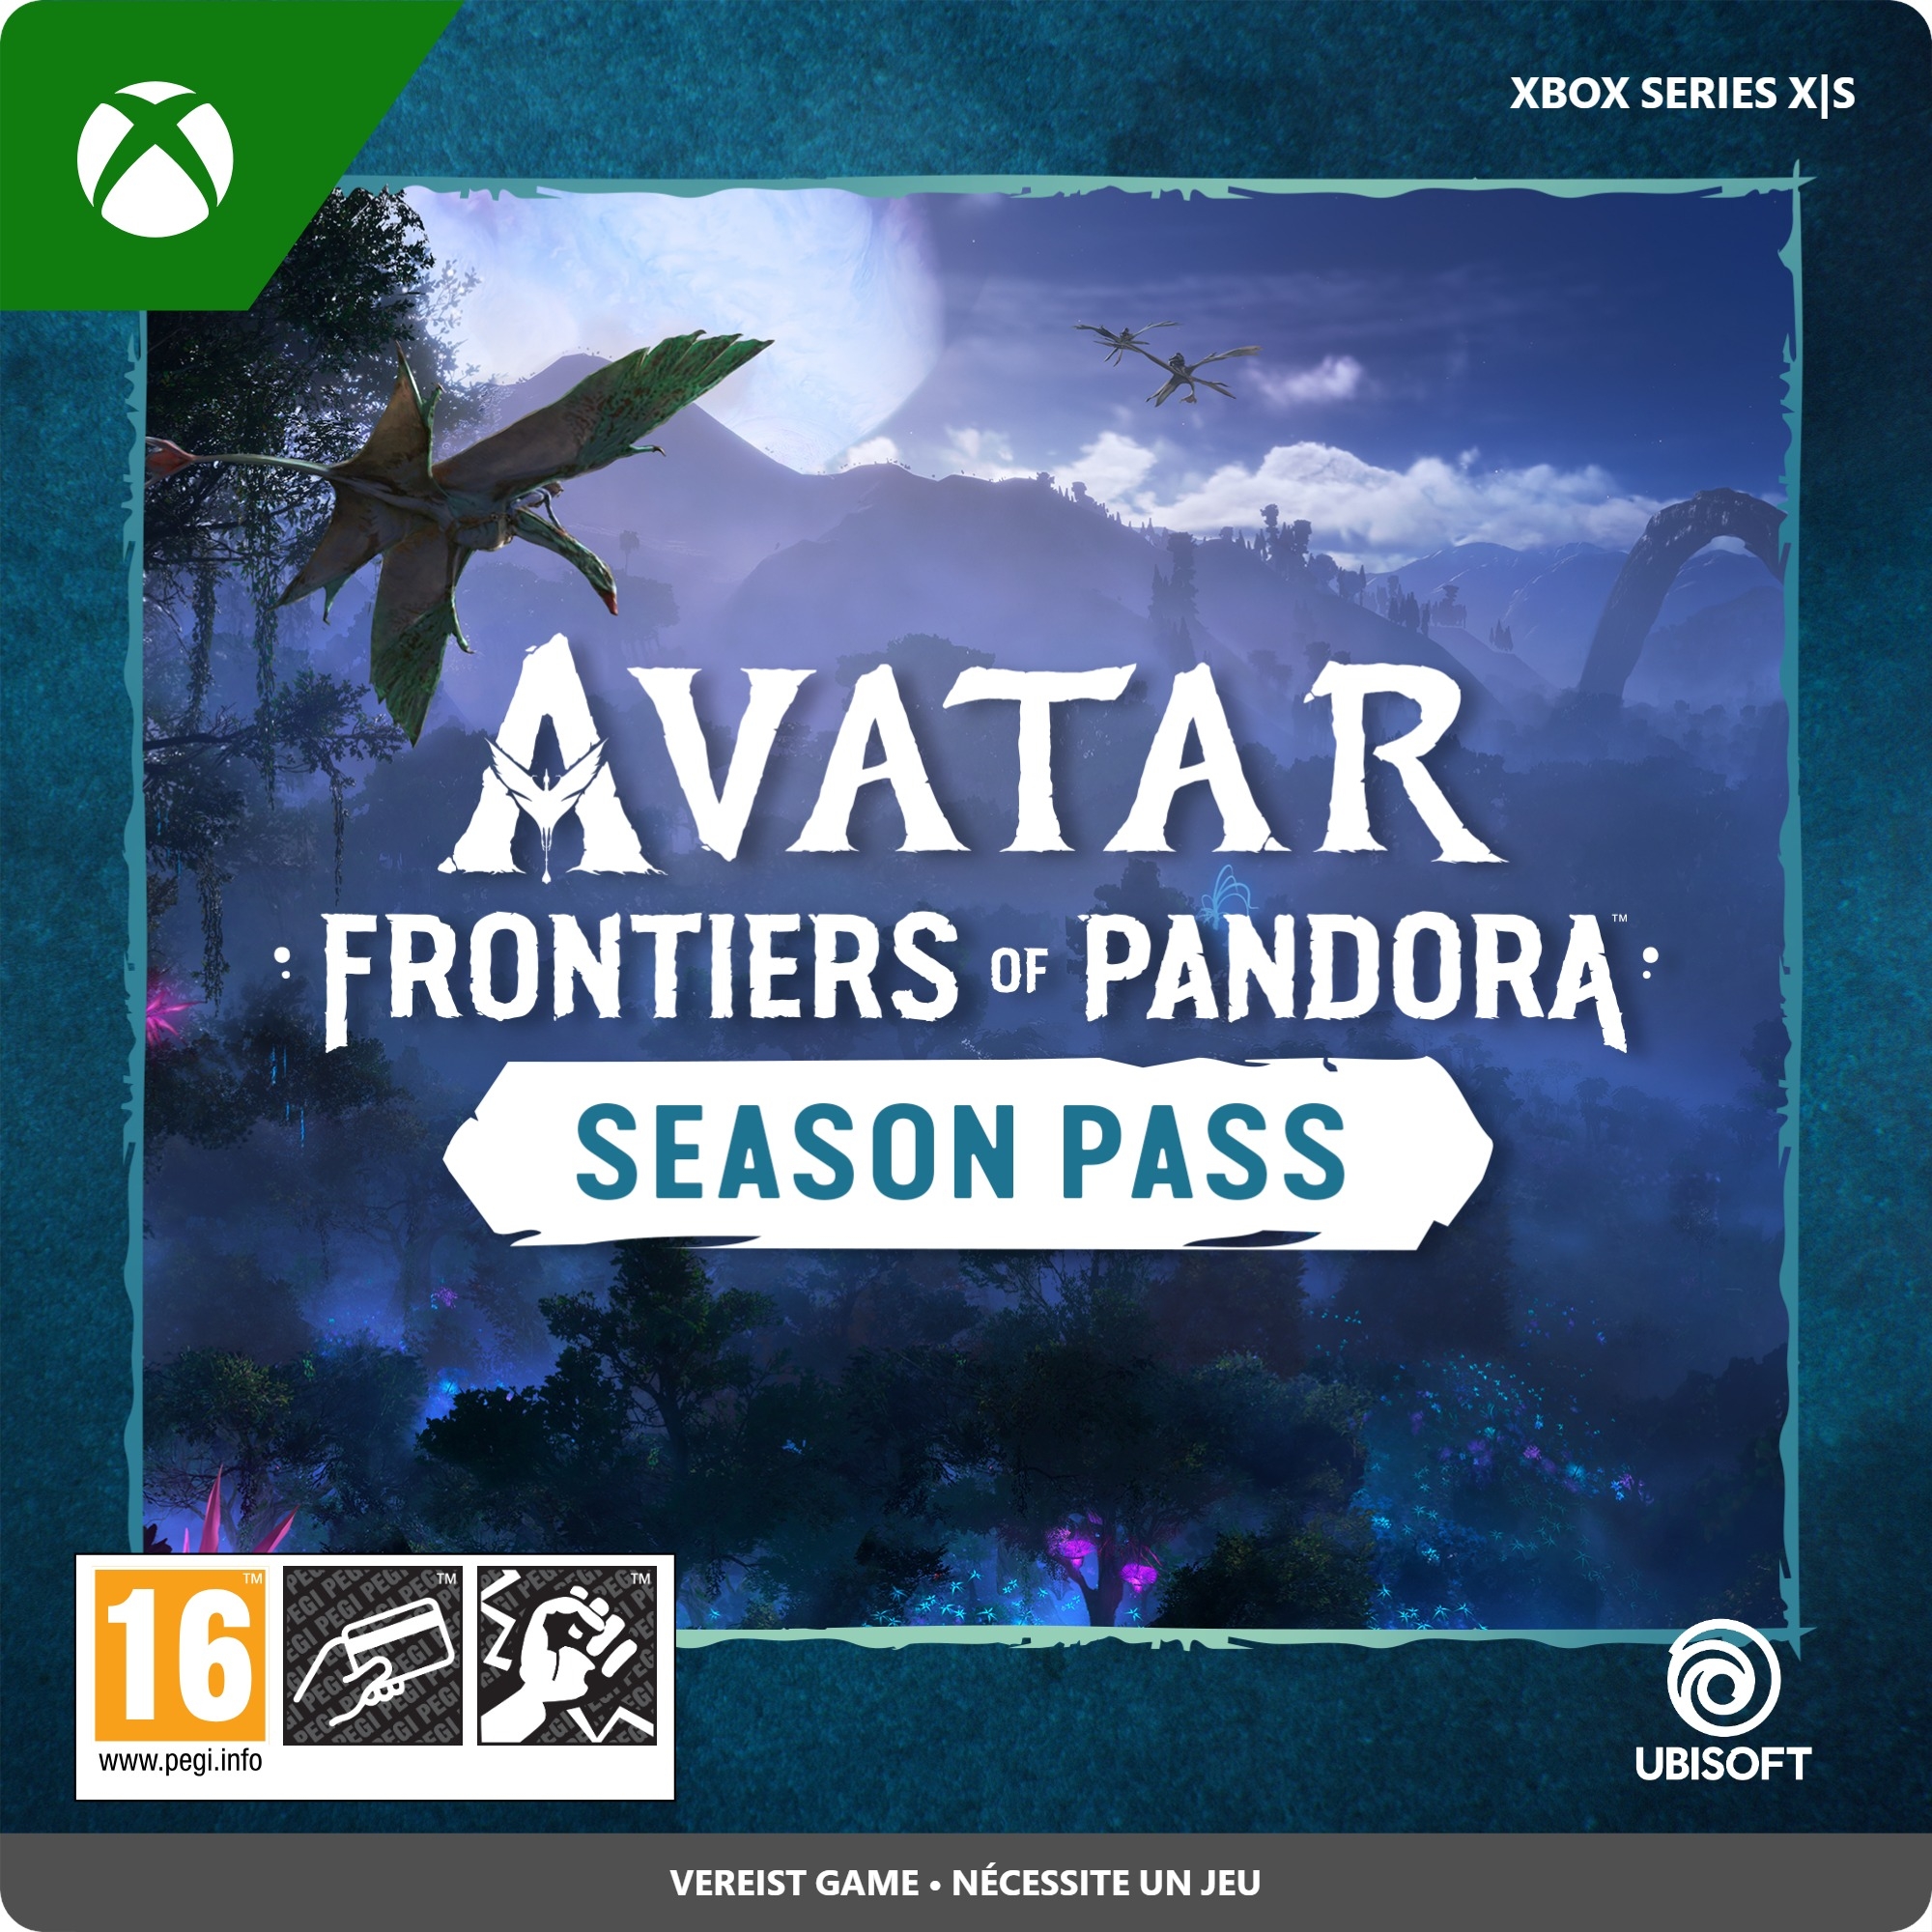 Avatar: Frontiers of Pandora Season Pass Add On - Xbox Series X|S